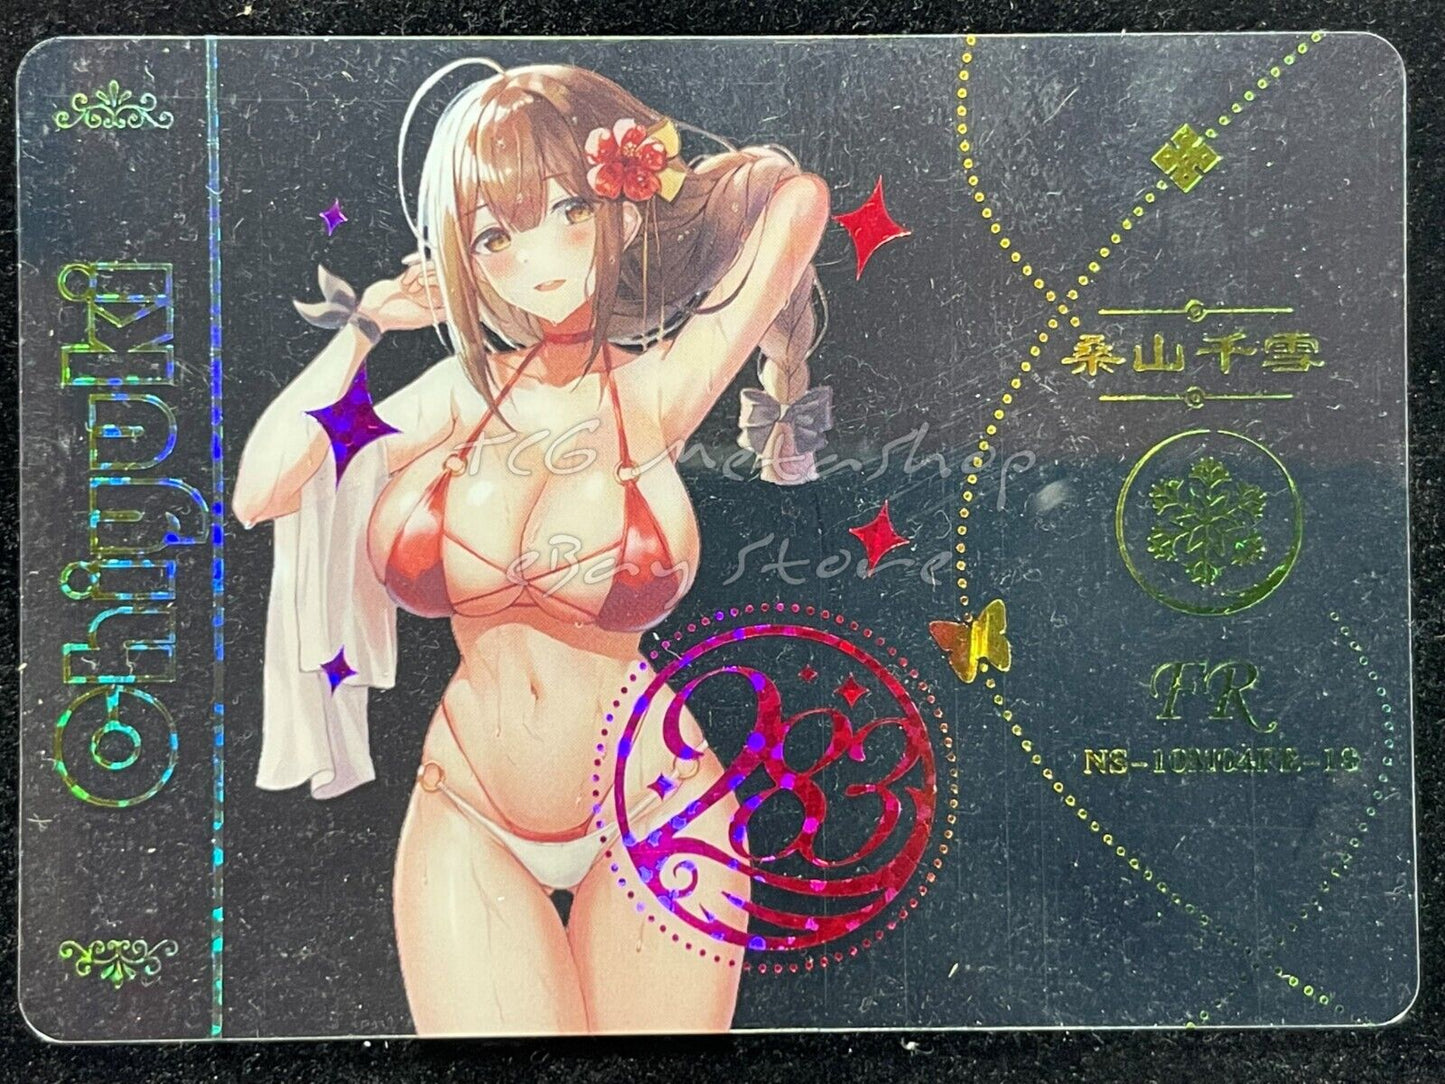 🔥 10m04 [Pick Your Singles MR LP SP FR CP BW] Goddess Story Waifu Anime Card 🔥